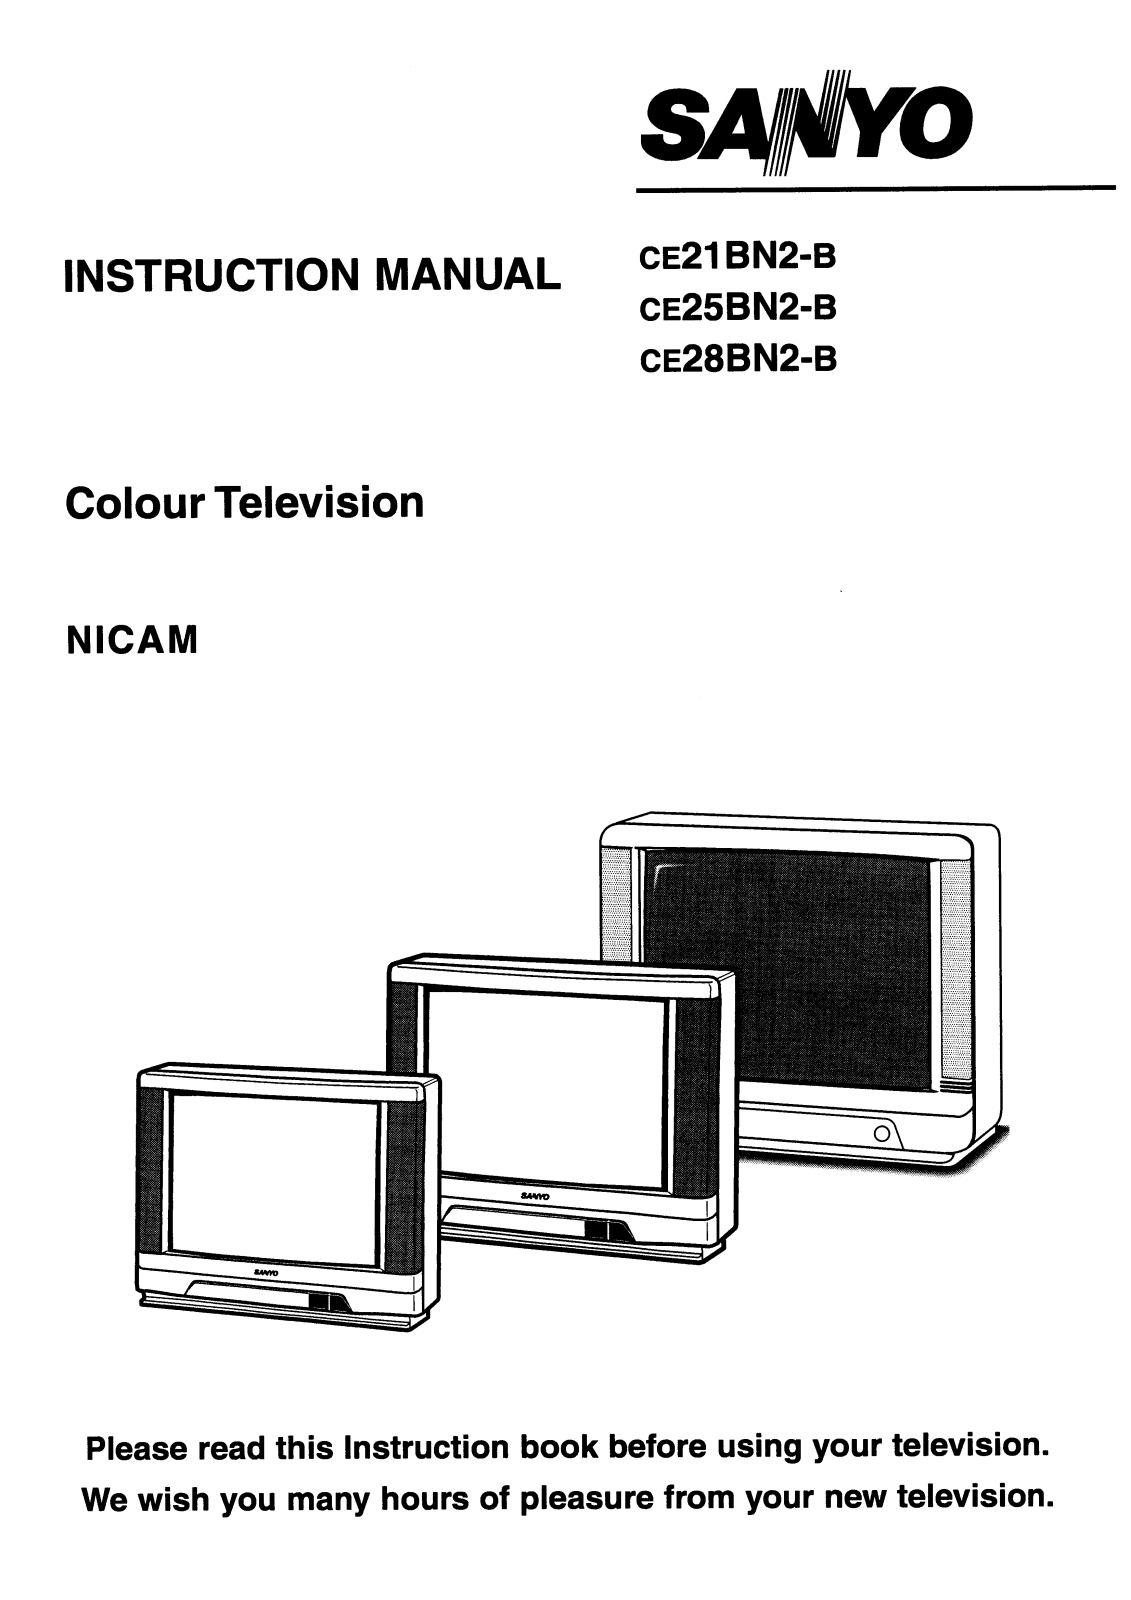 Sanyo CE21BN2-B, CE25BN2-B, CE28BN2-B Instruction Manual